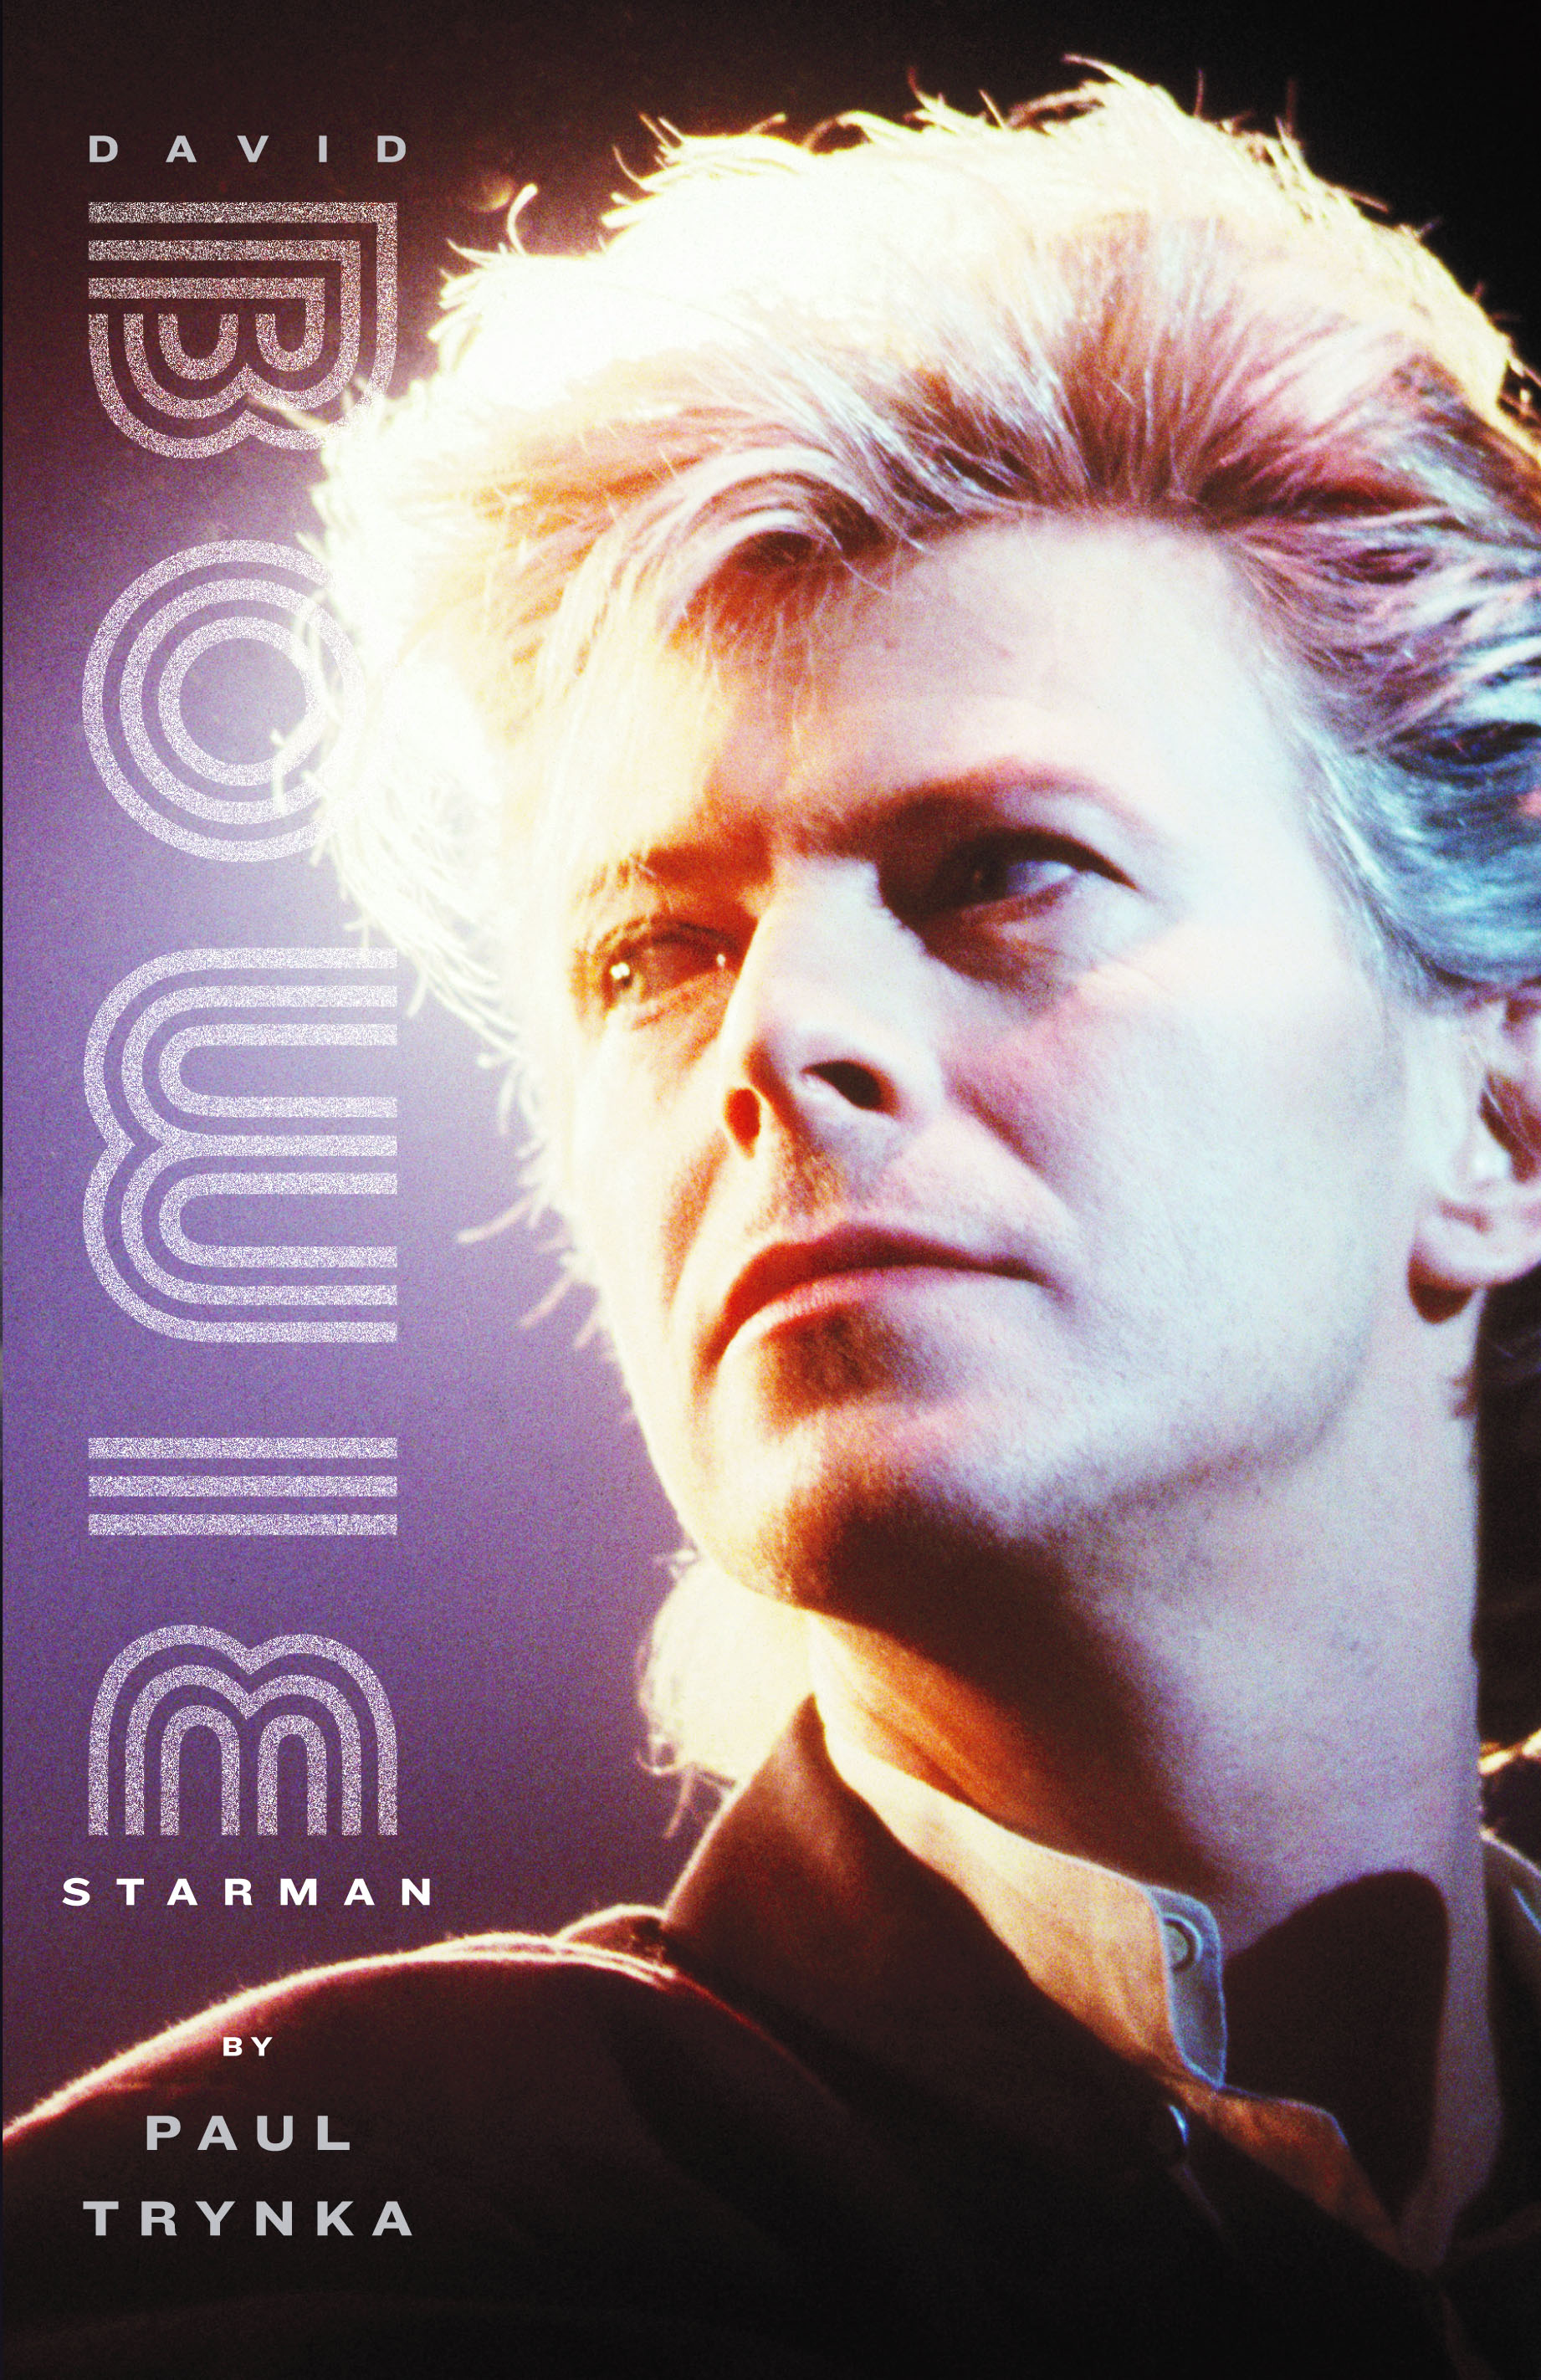 Contest: Win ‘David Bowie: Starman,’ new biography of the Thin White Duke